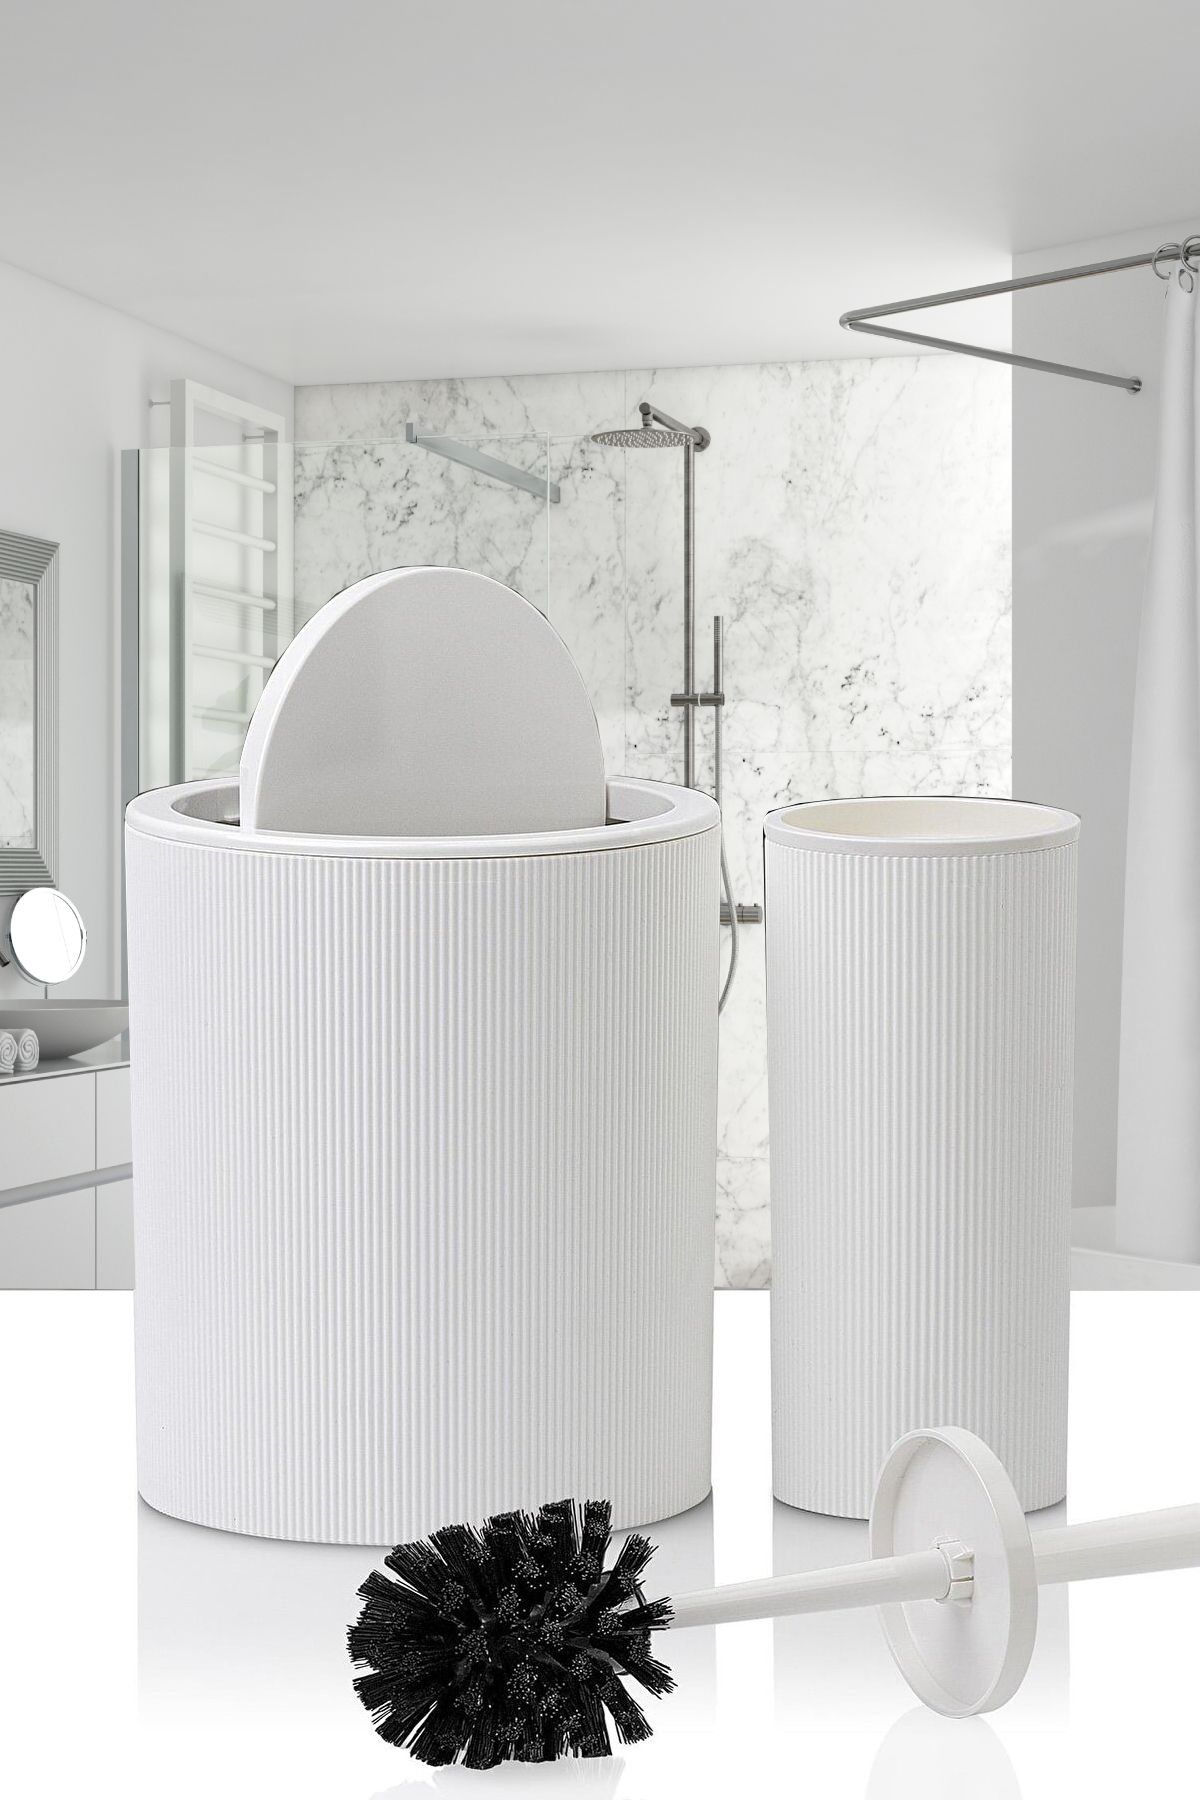 Tugomer 2'li Banyo Seti -Stil Yuvarlak Dokunmatik Pratik Kapaklı Çizgili Banyo Çöp Kovası - Fırça Seti Beyaz